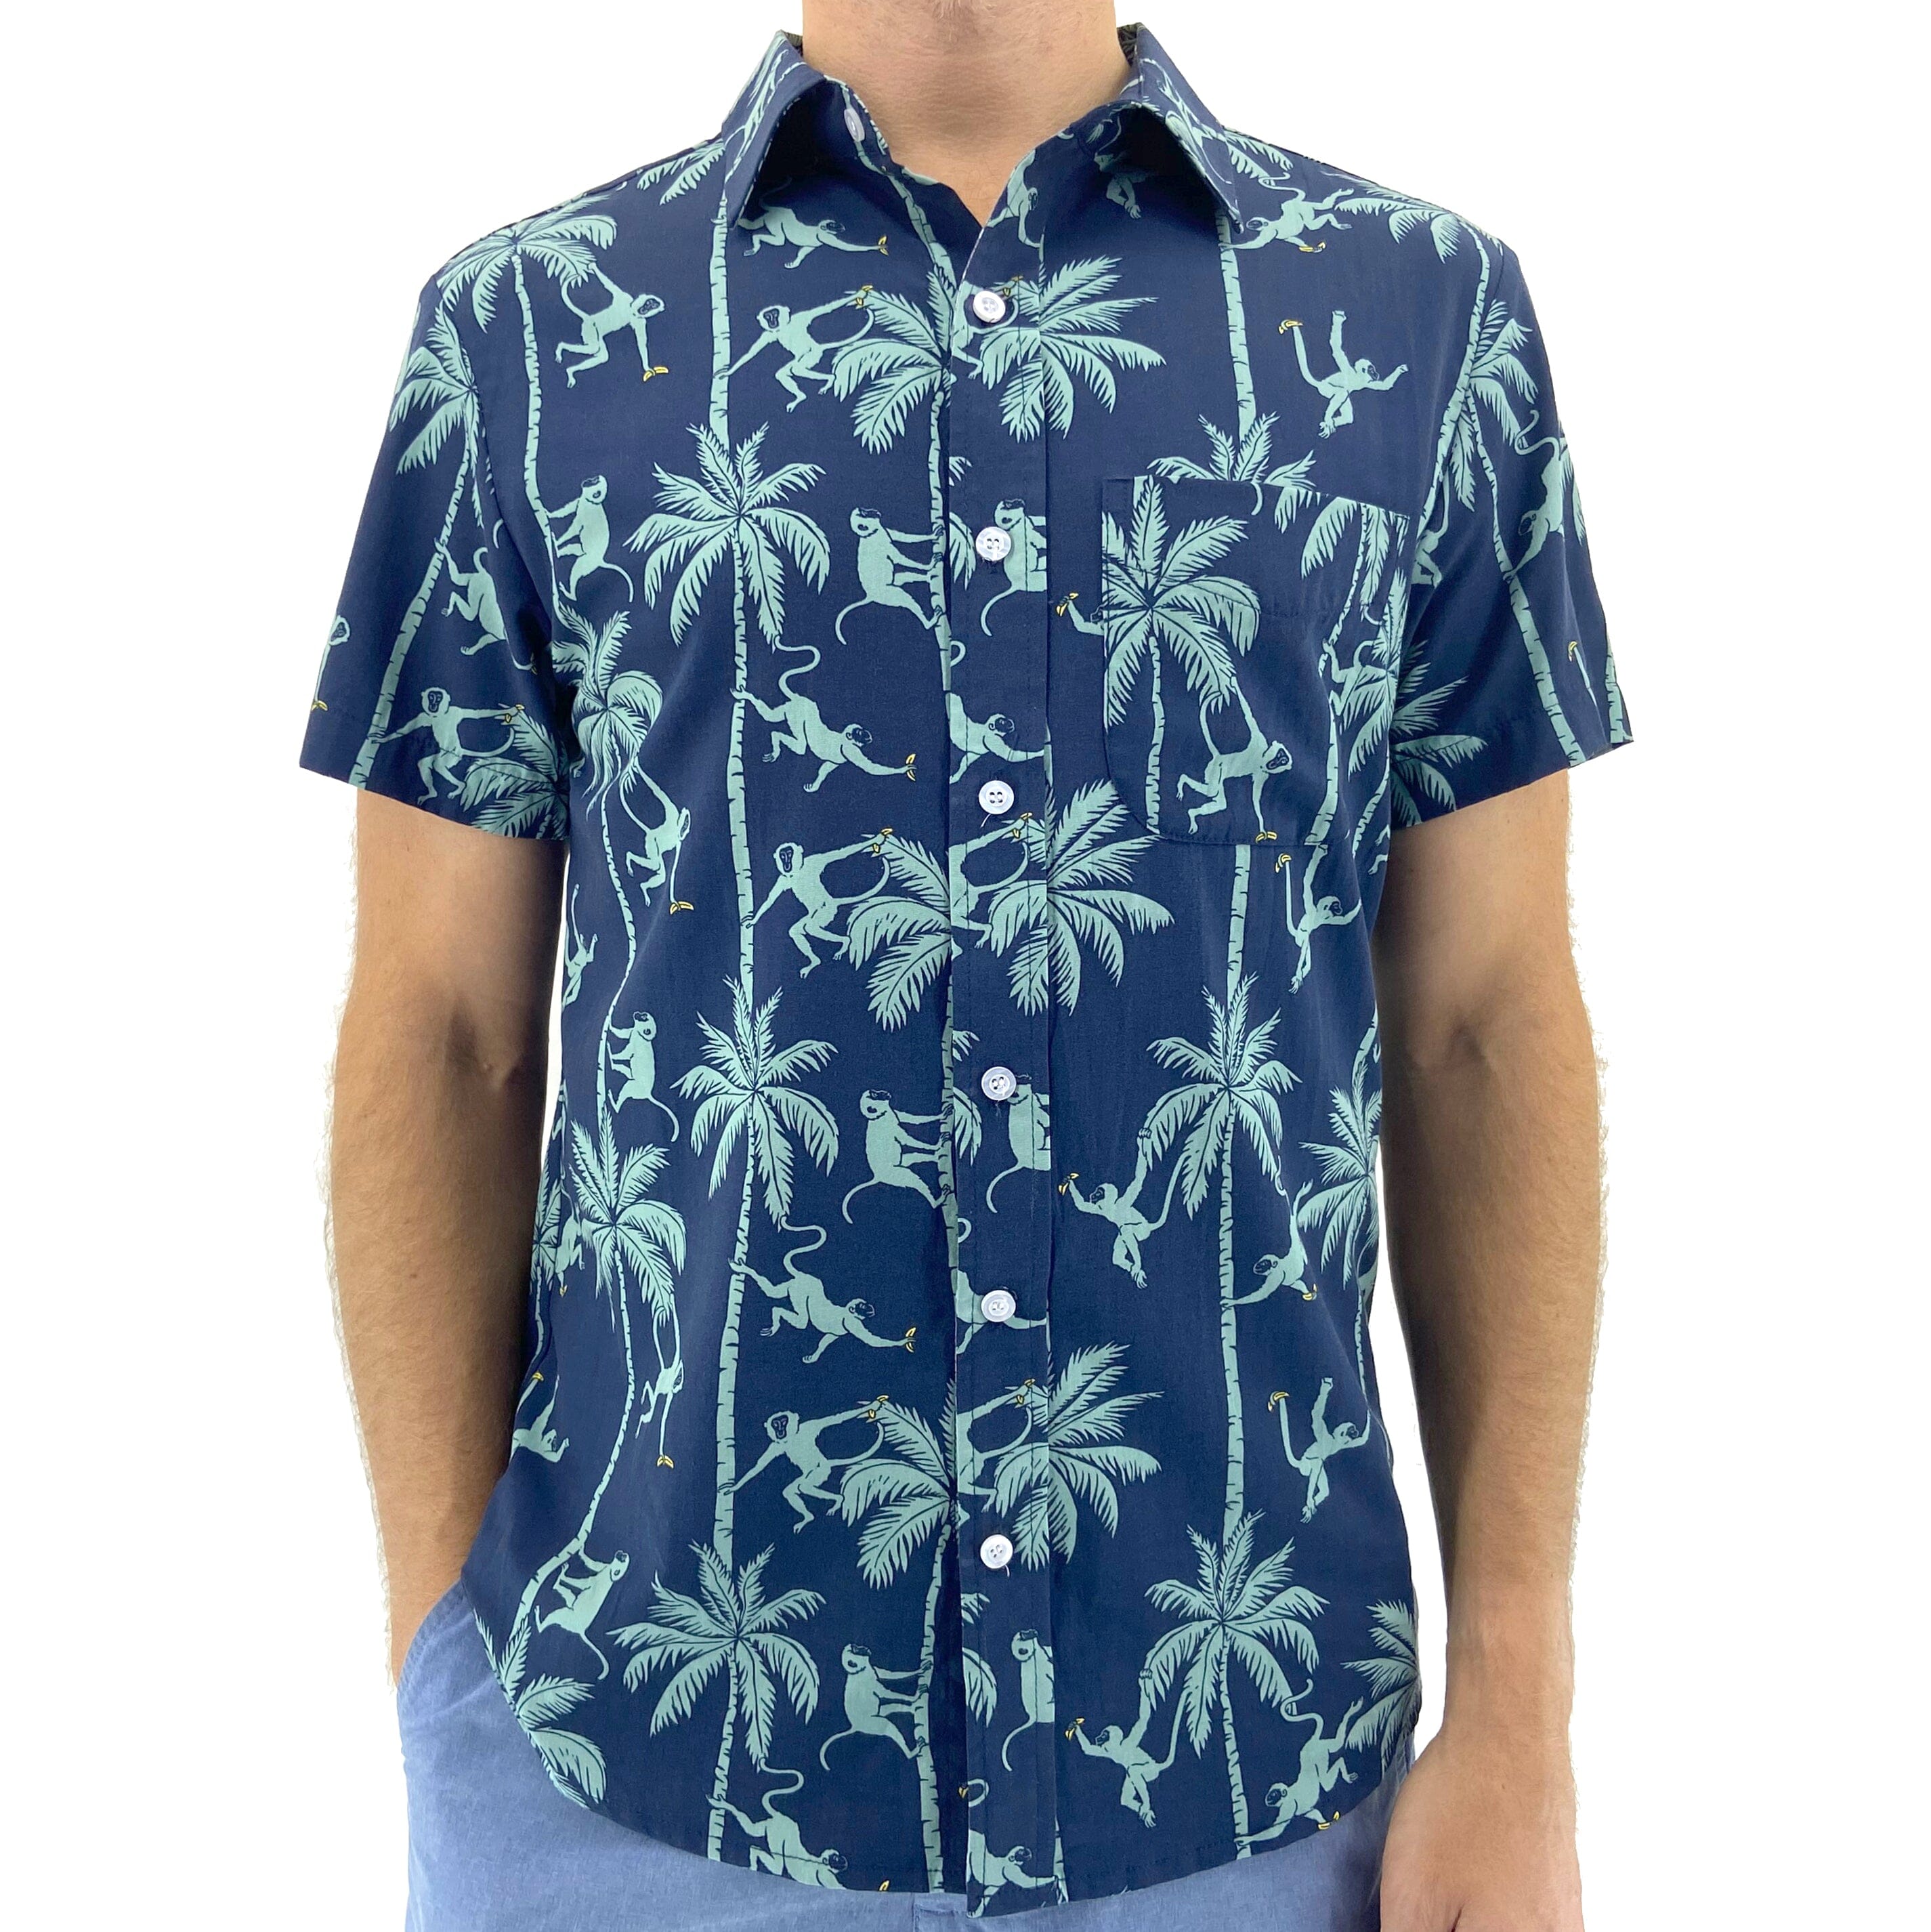 Buy Men's Short Sleeve Button Down Hawaiian Shirts with Monkey Print